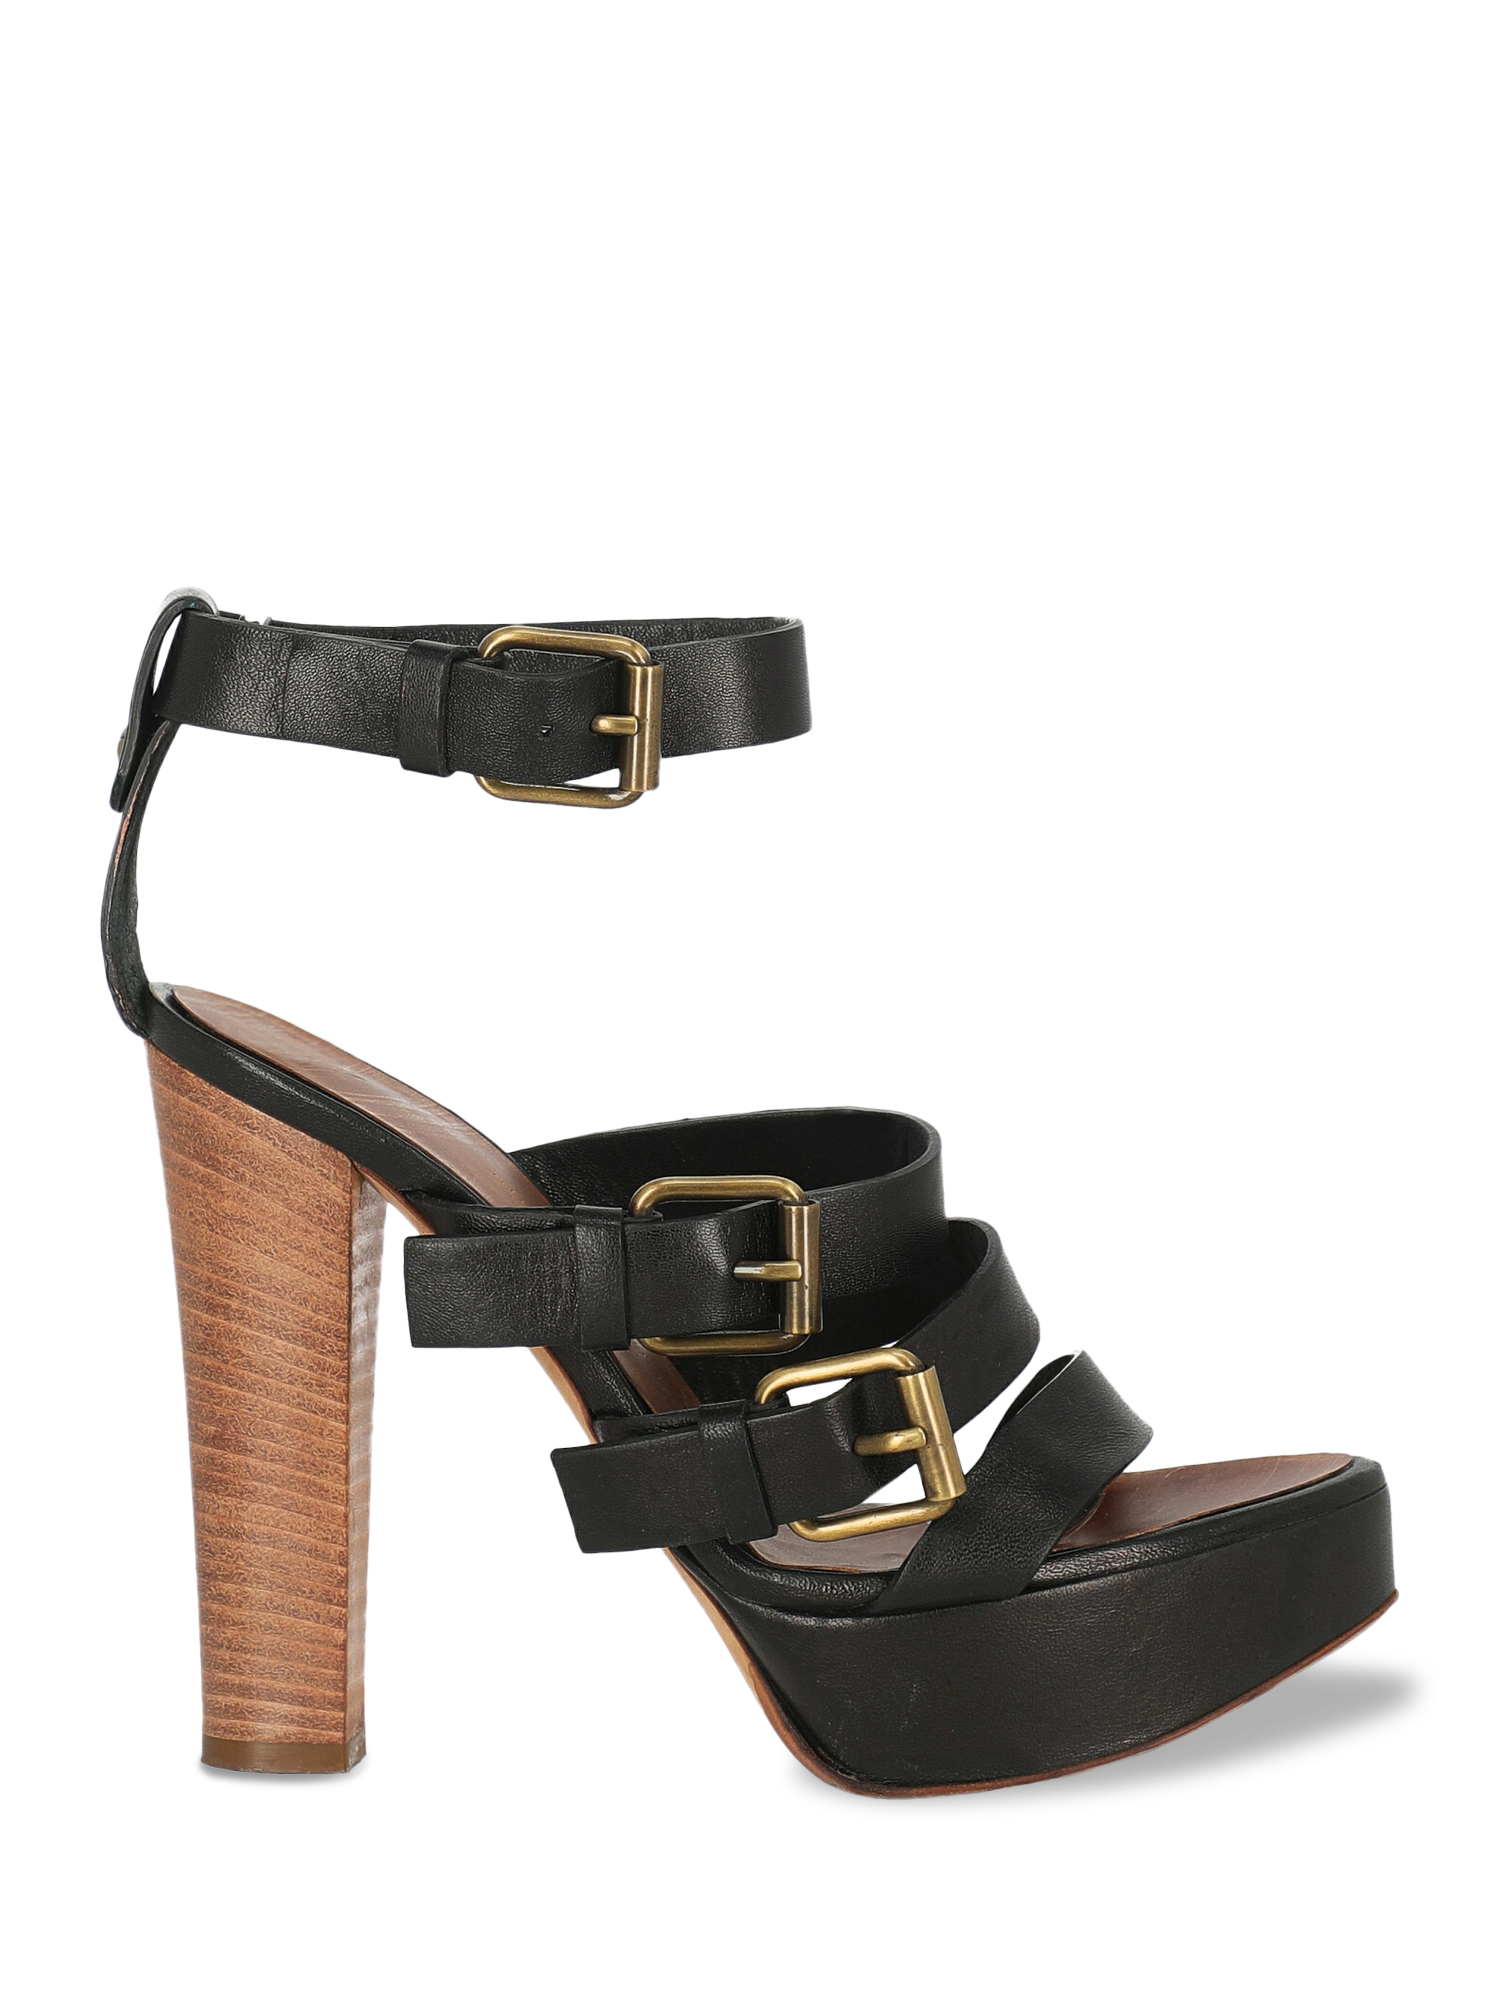 Sandales Pour Femme - Giuseppe Zanotti - En Leather Black - Taille: IT 36.5 - EU 36.5